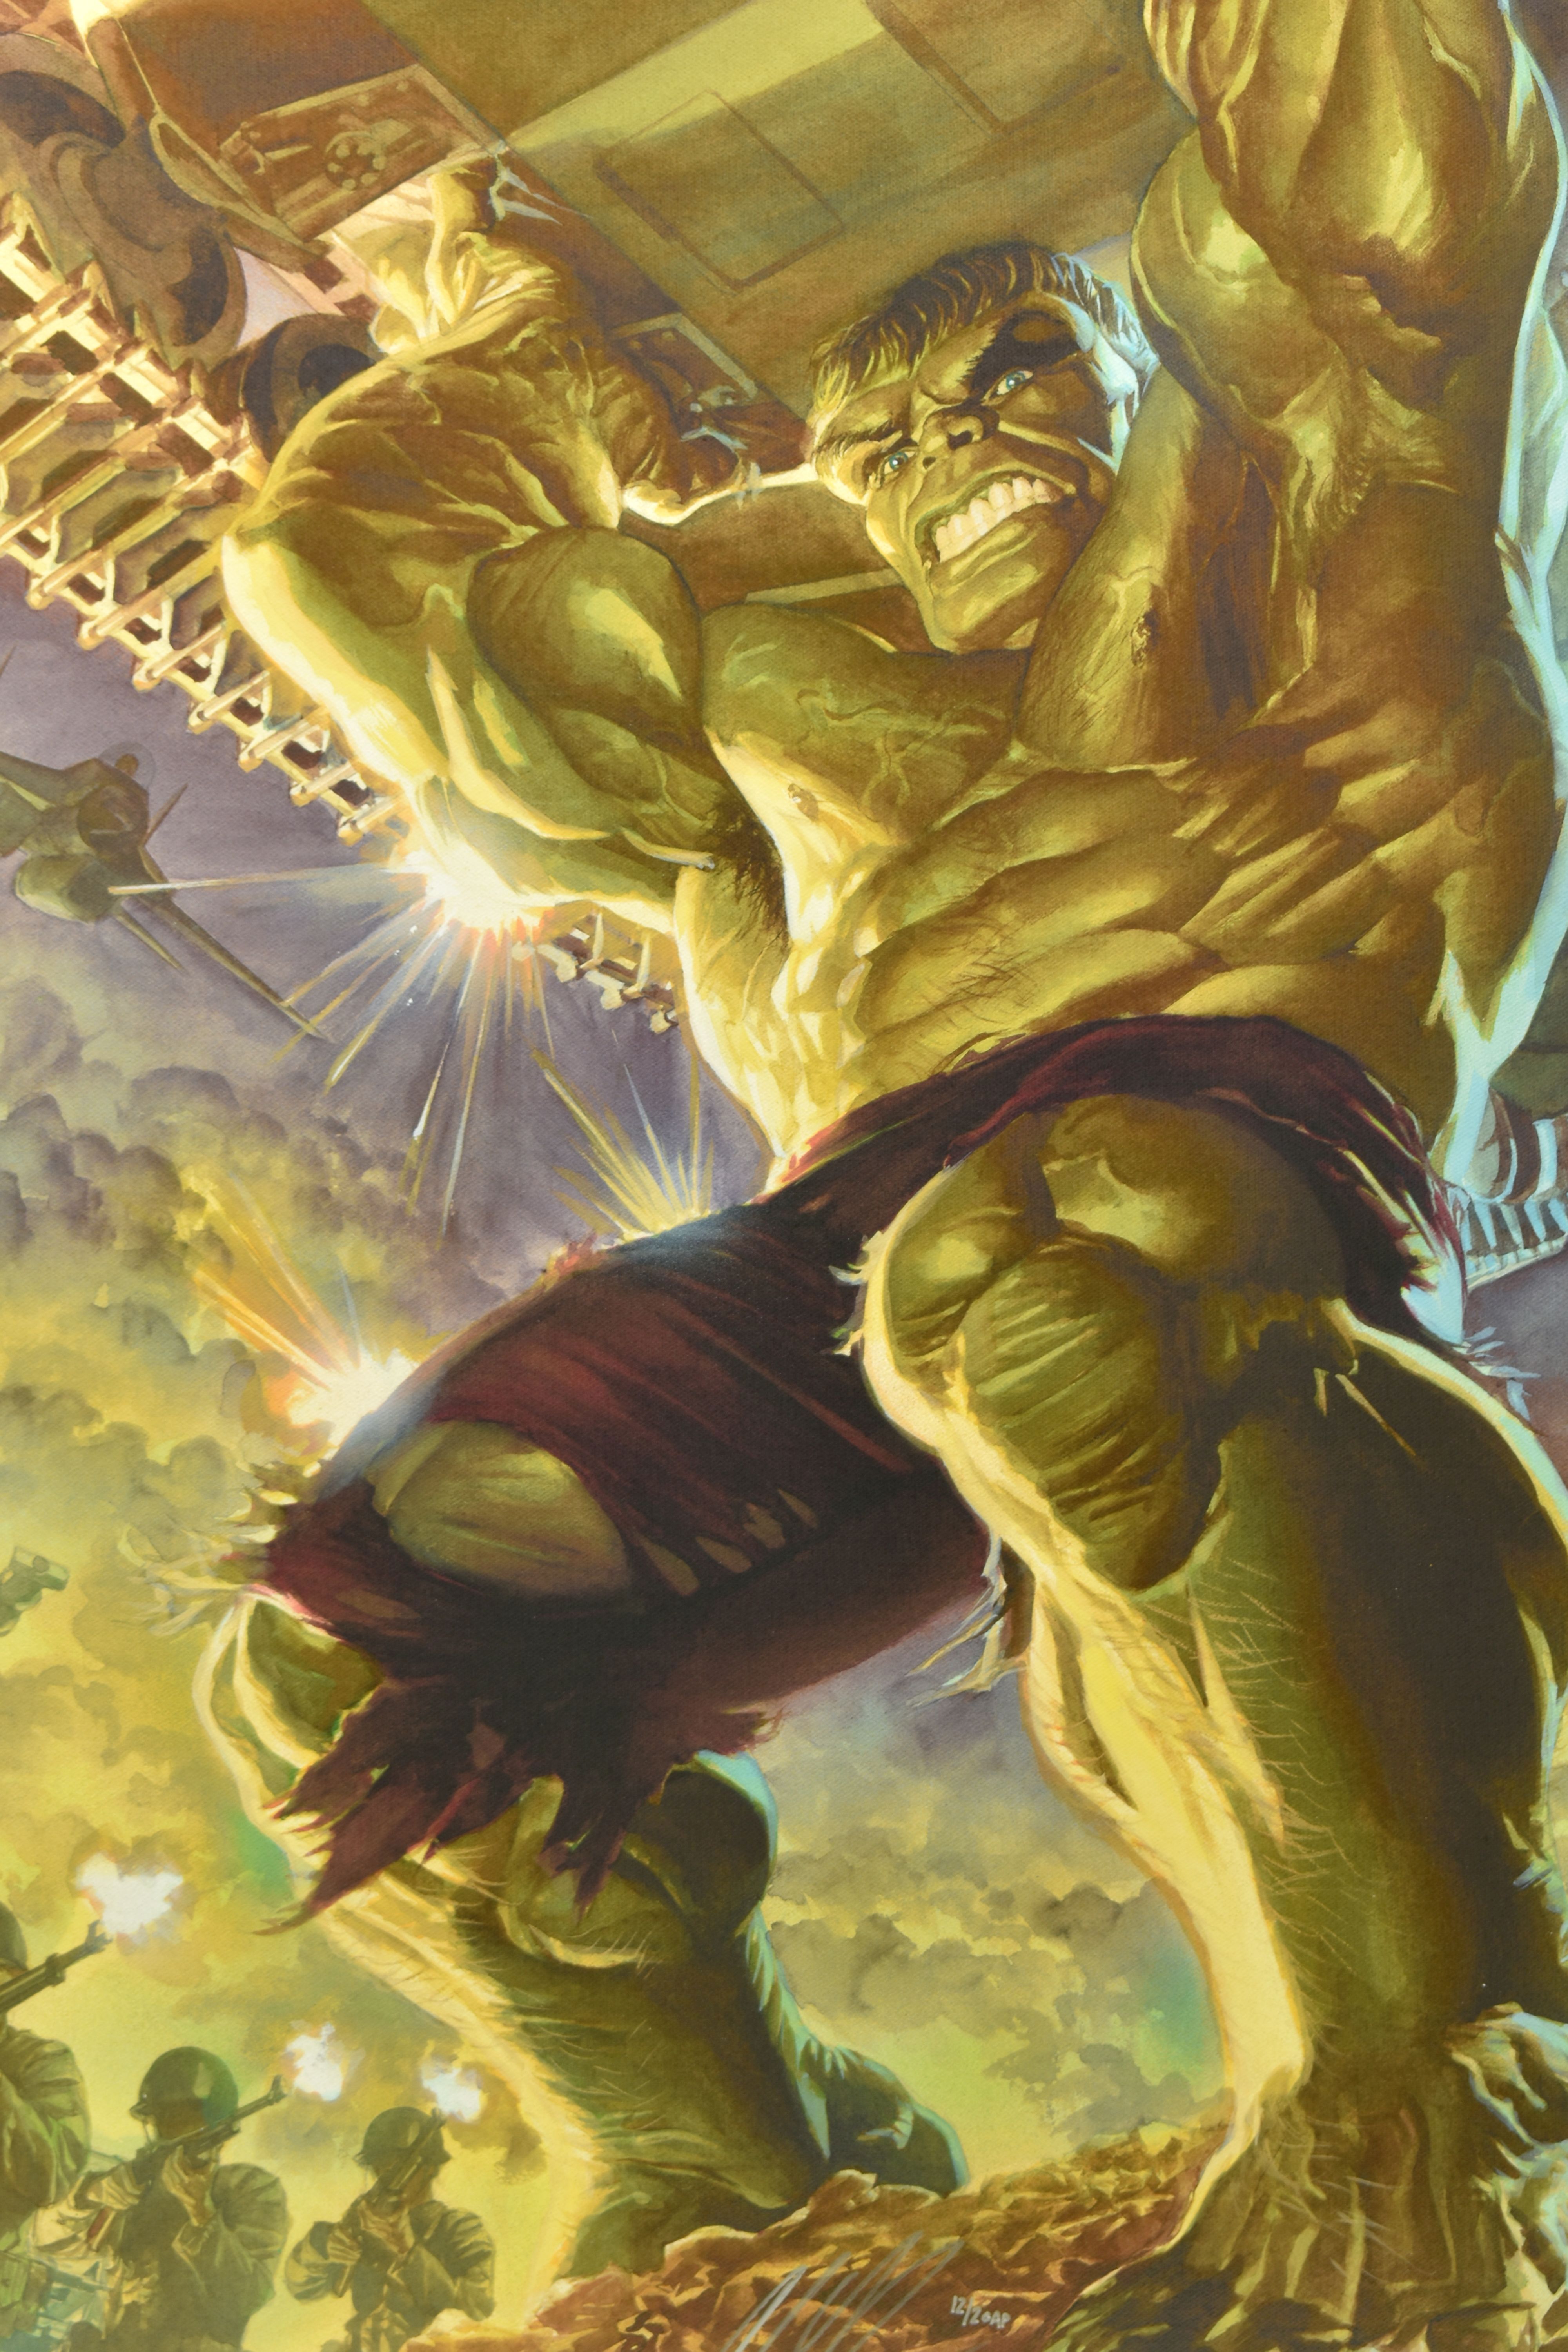 ALEX ROSS FOR MARVEL COMICS 'IMMORTAL HULK', an artist proof edition print on canvas, depicting Hulk - Image 2 of 8